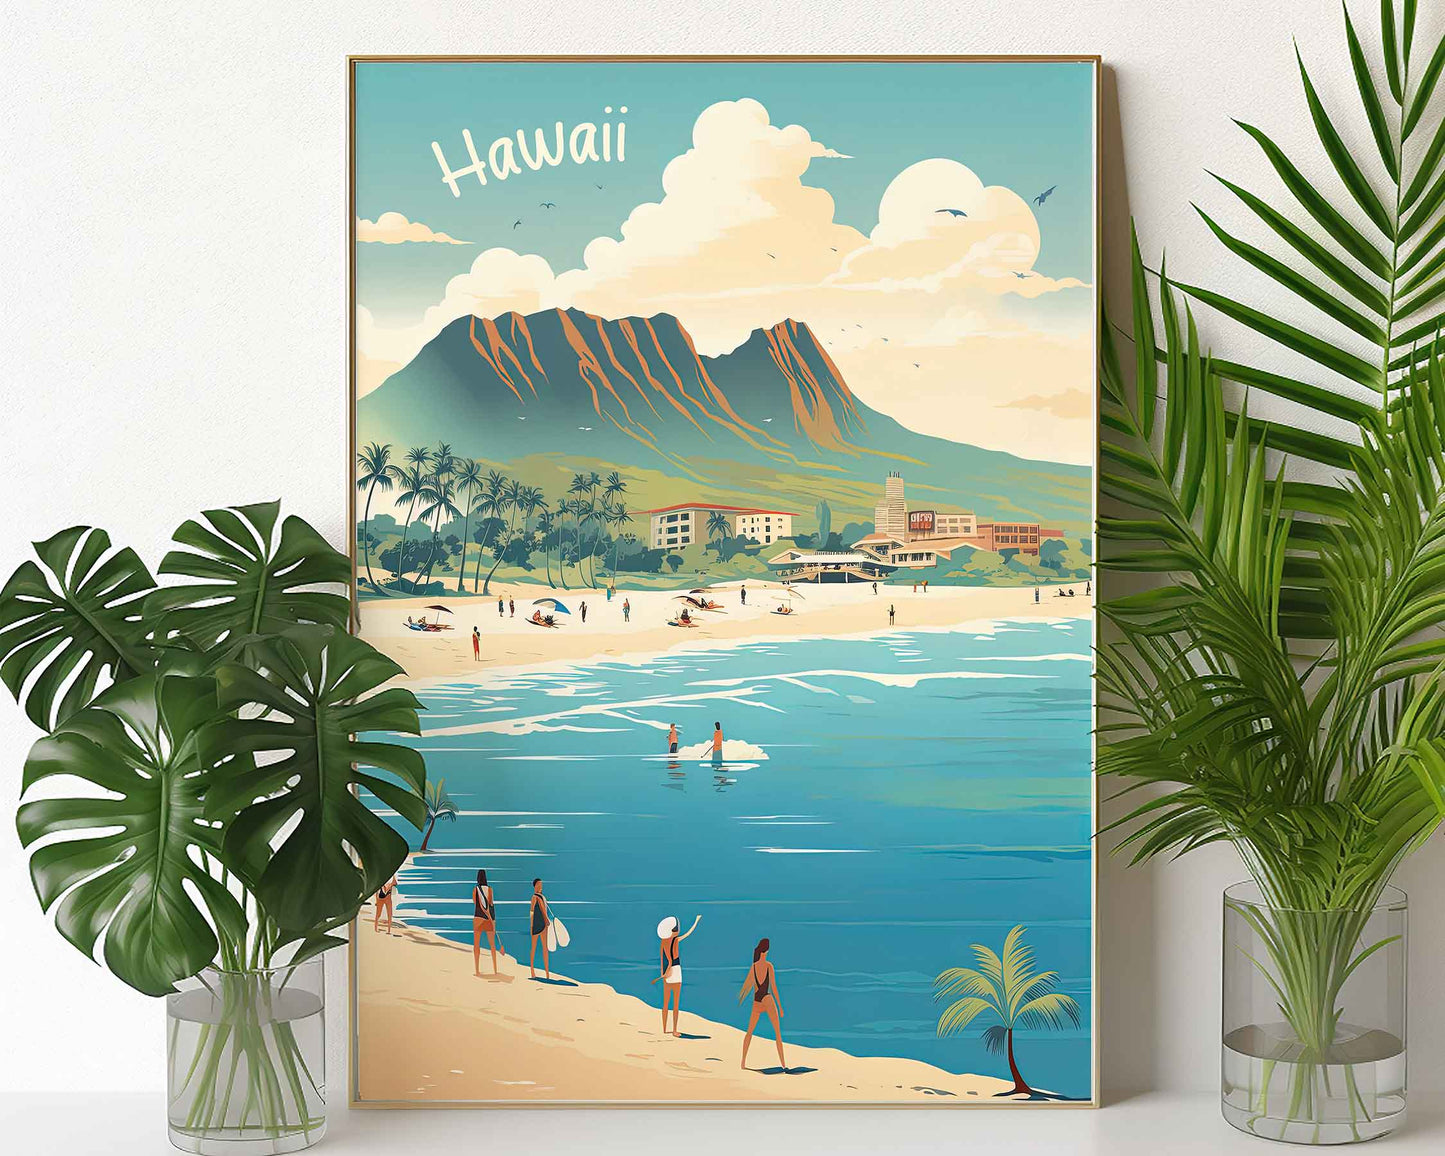 Framed Image of Oahu Hawaii Wall Art Travel Poster Prints Illustration